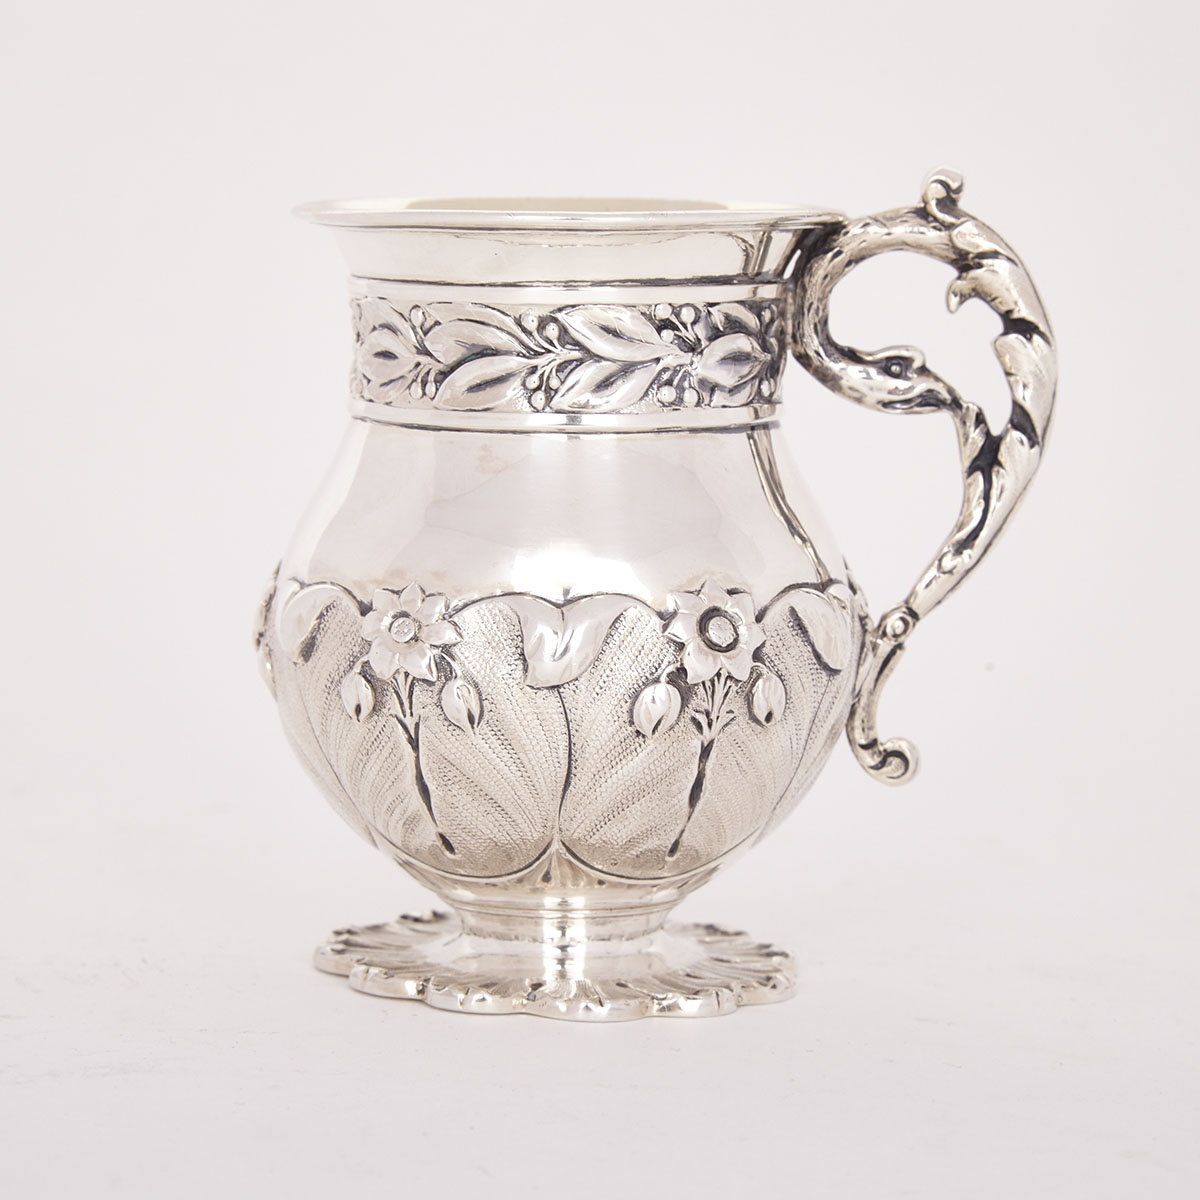 George IV Silver Small Mug, Charles Fox, London, 1828